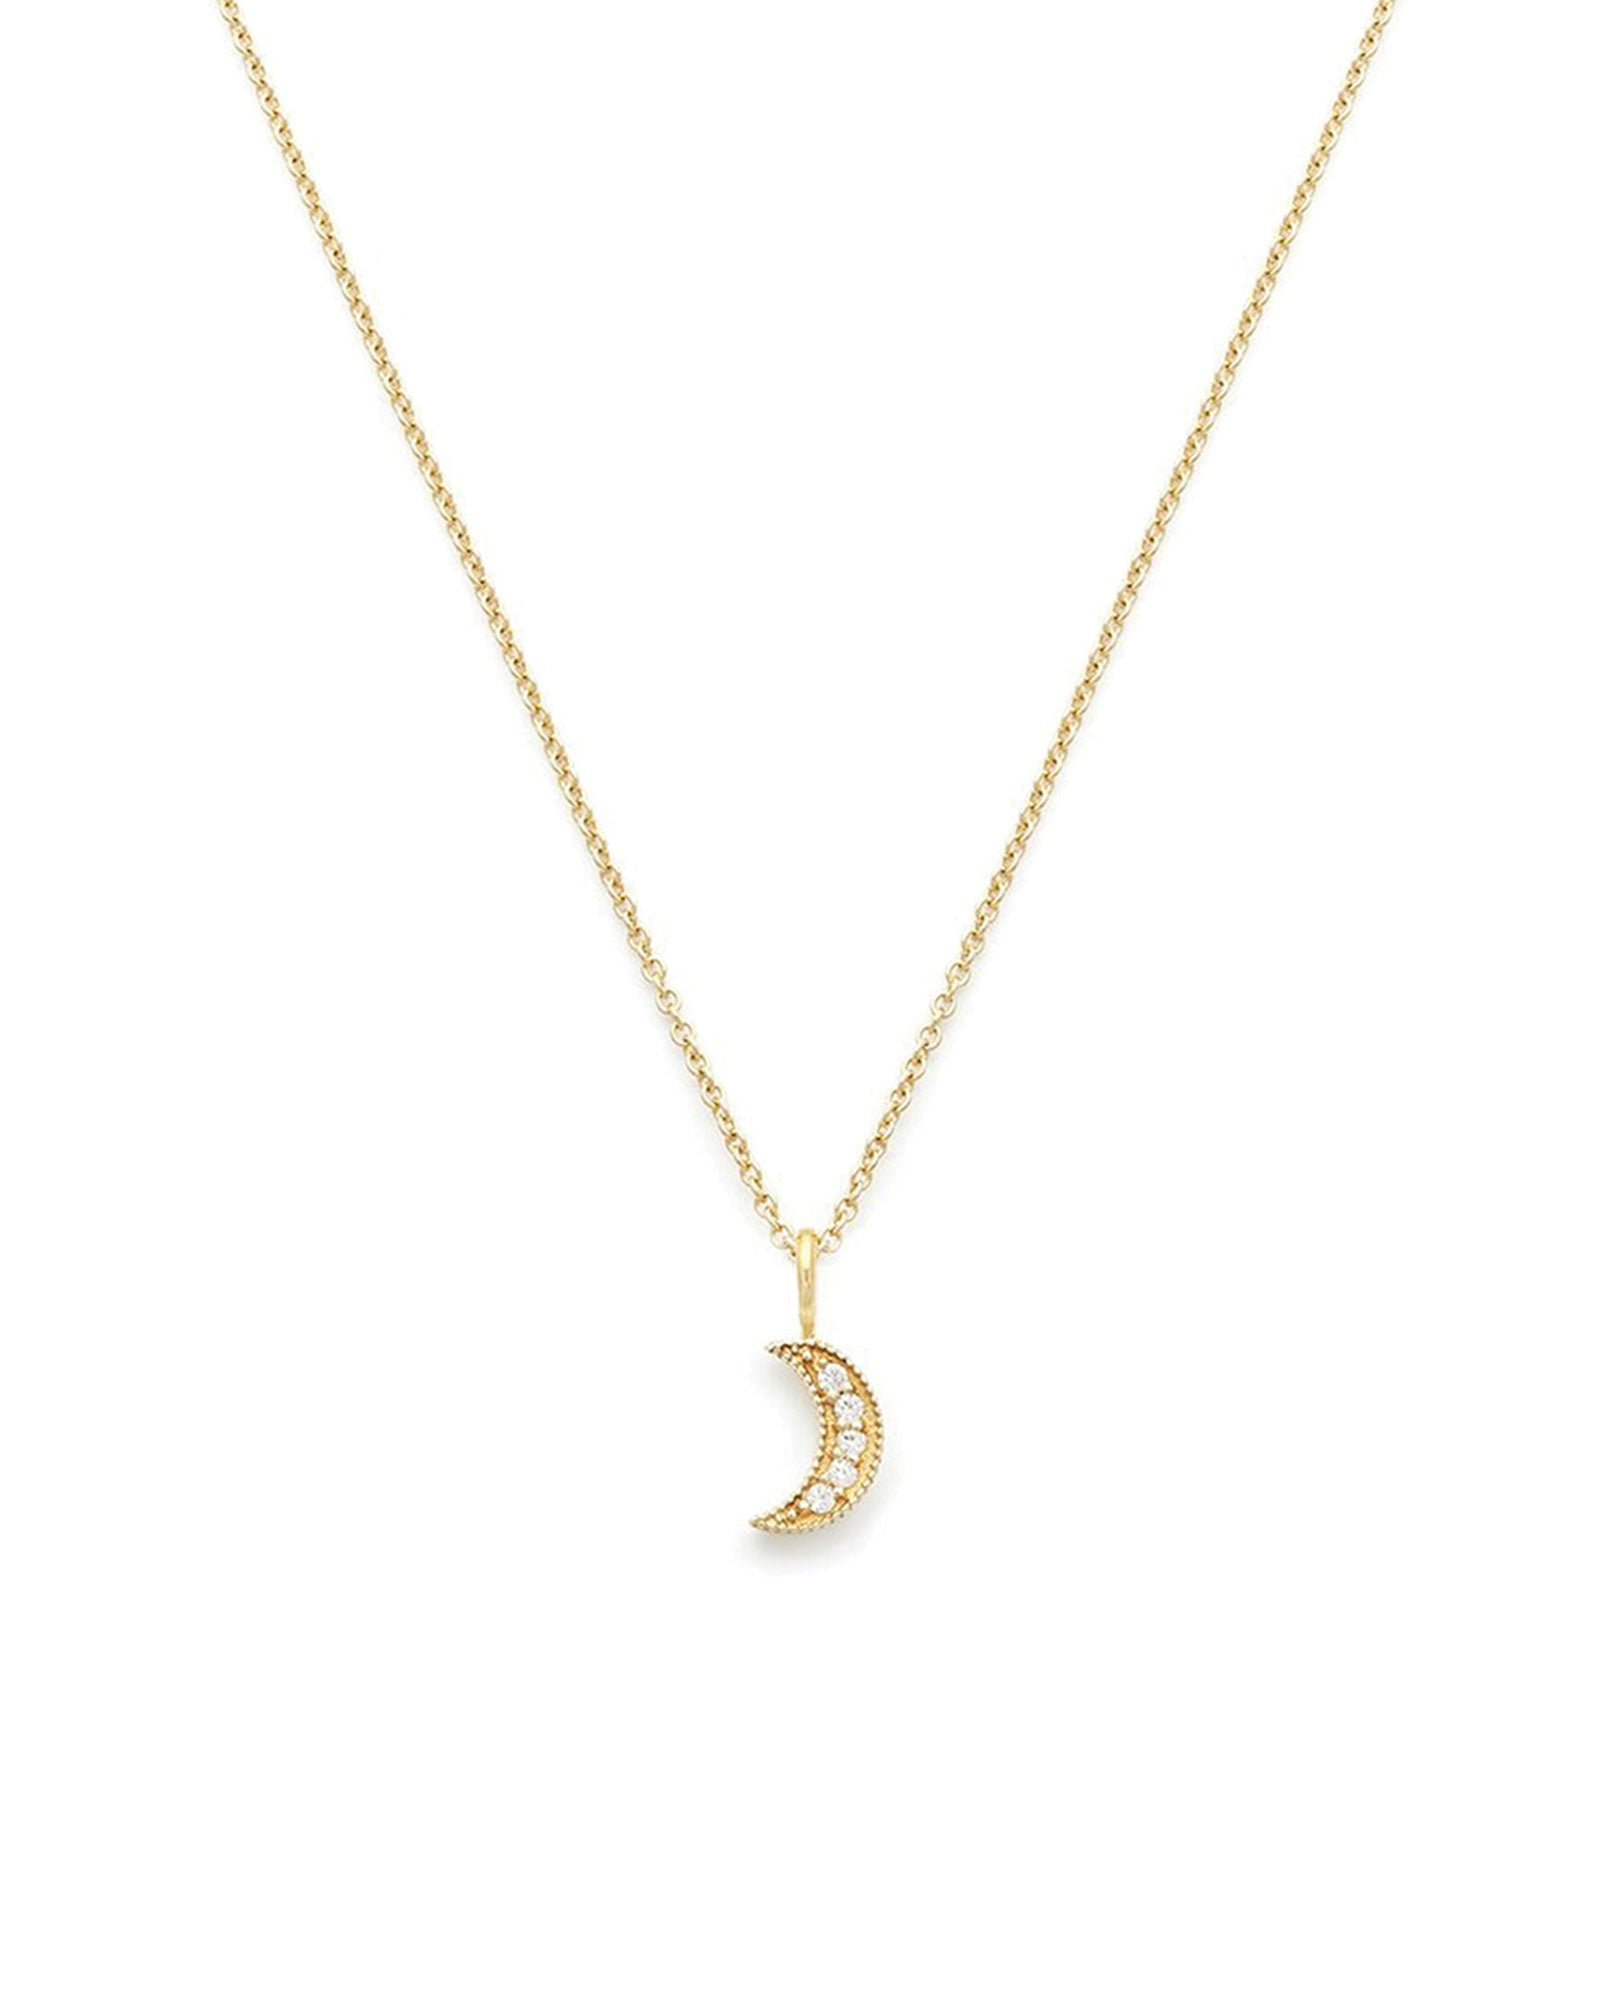 Leah Alexandra Luna Crescent Moon Necklace 14k Gold Vermeil, 14k